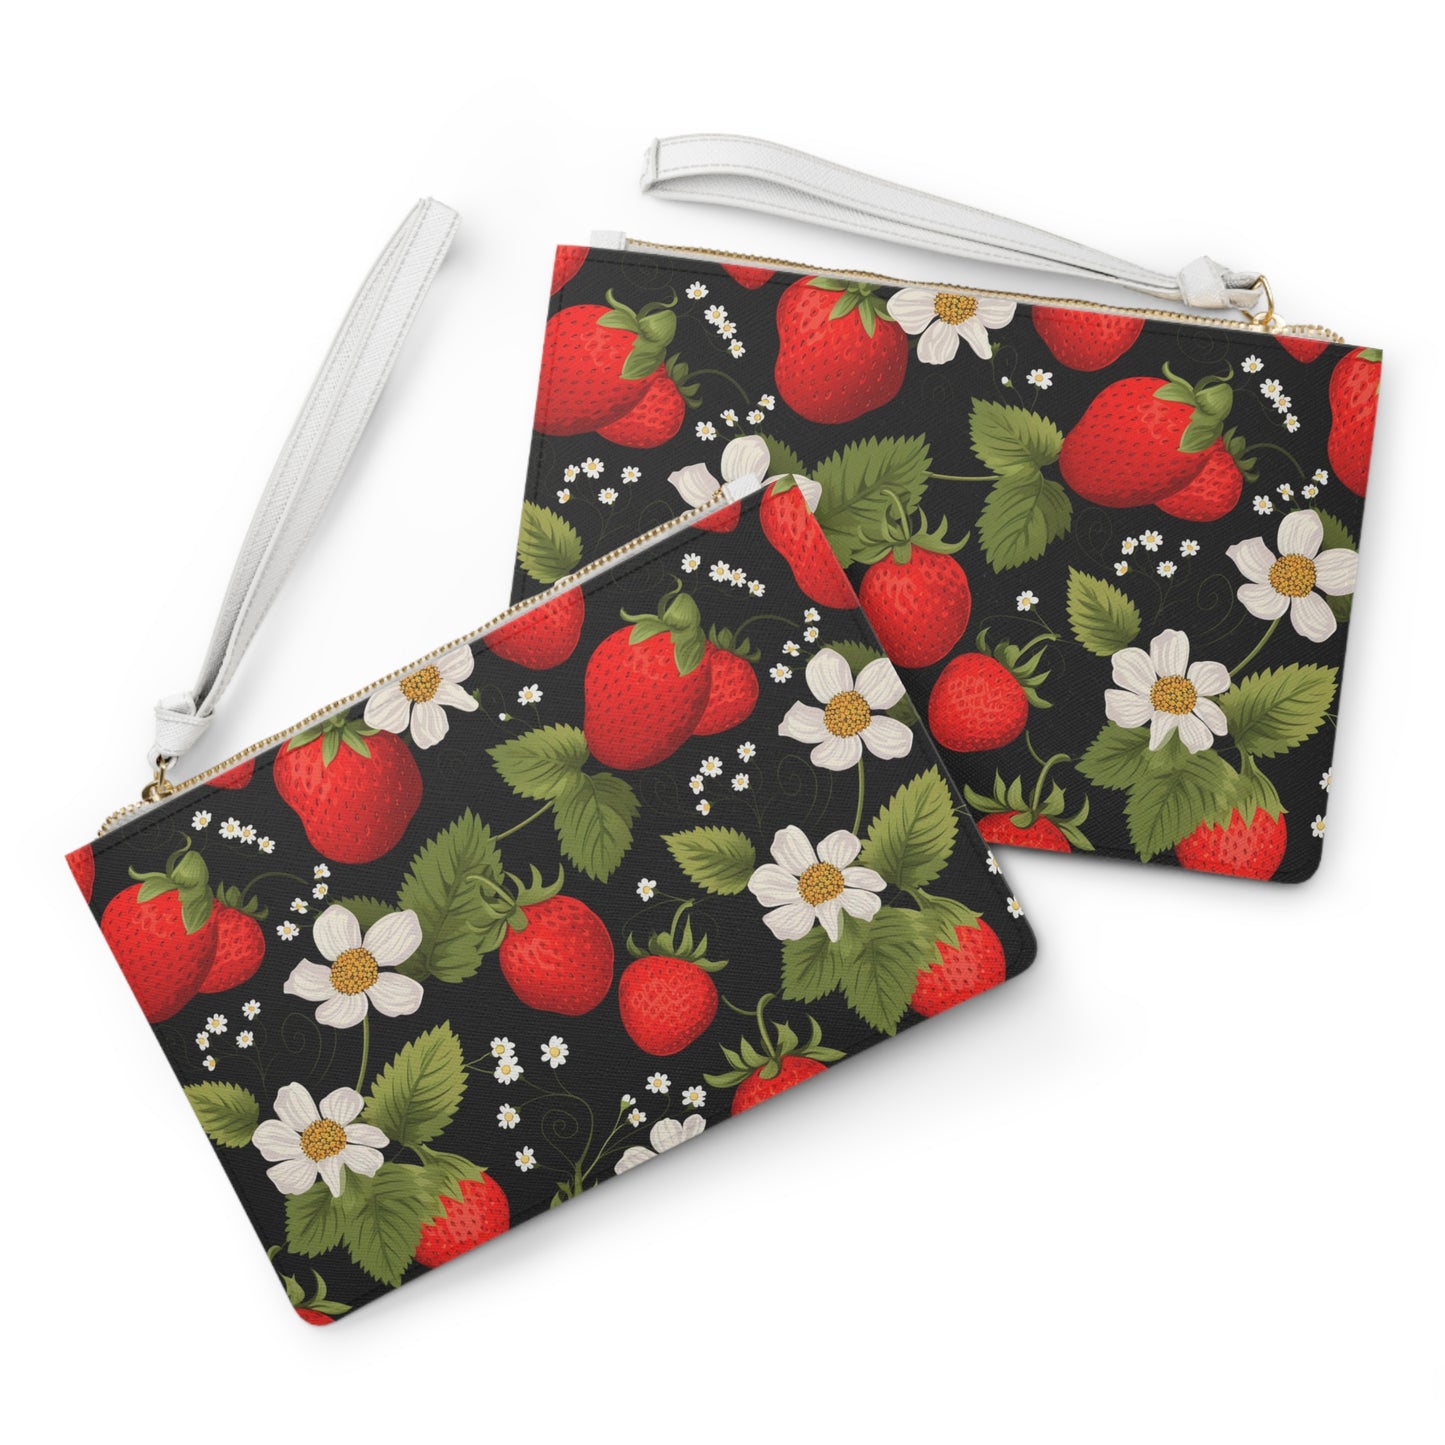 Cute Strawberry Clutch Bag